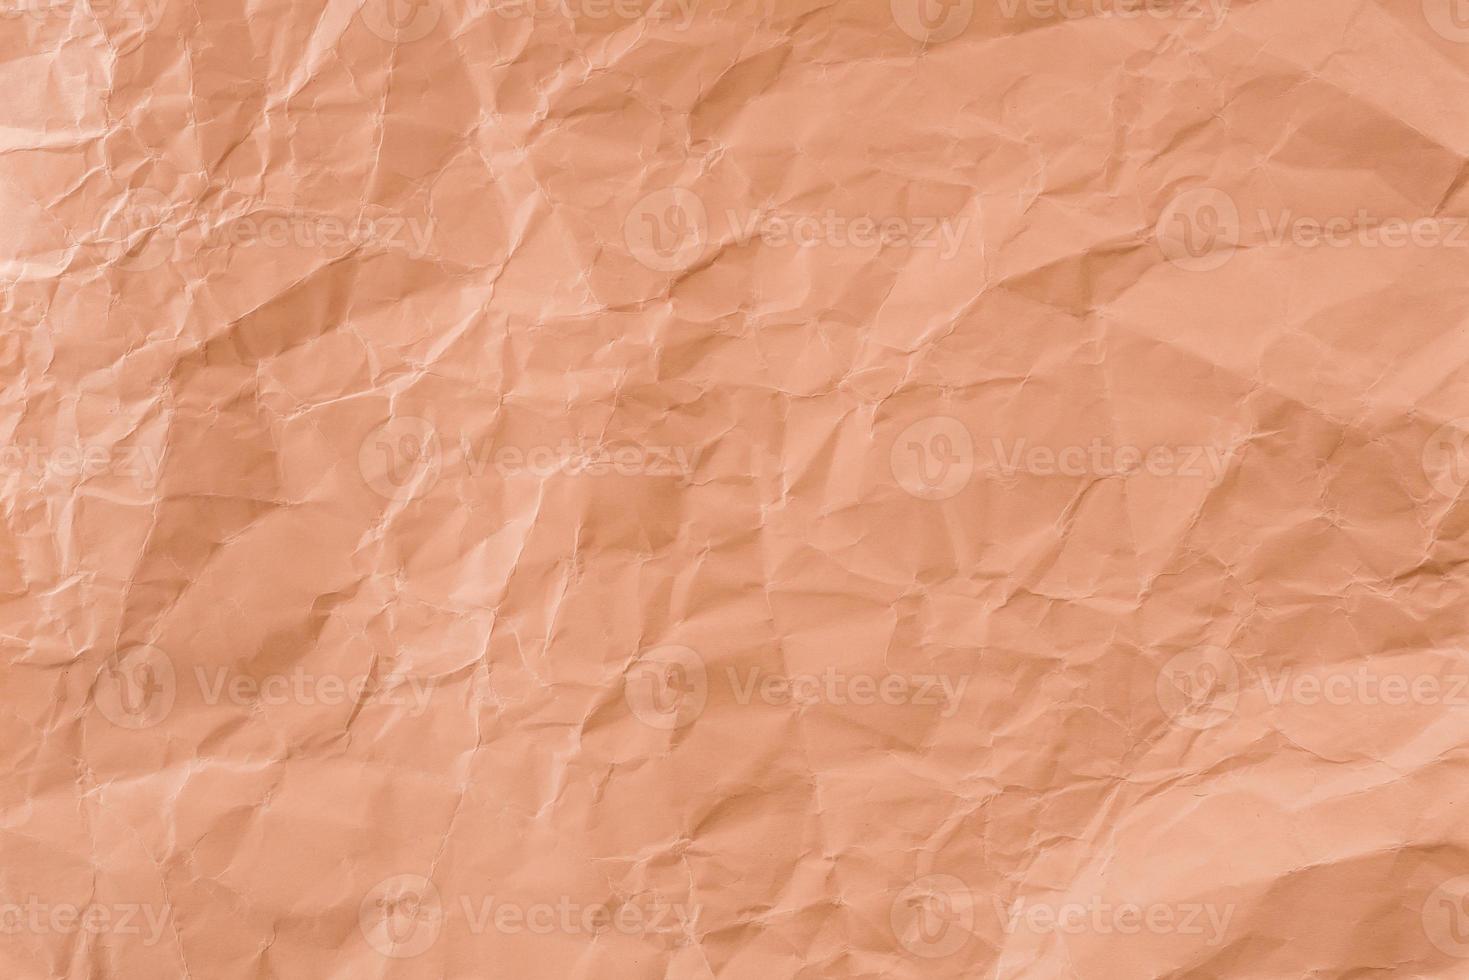 papel laranja amassado com textura macia. fundo simples. foto